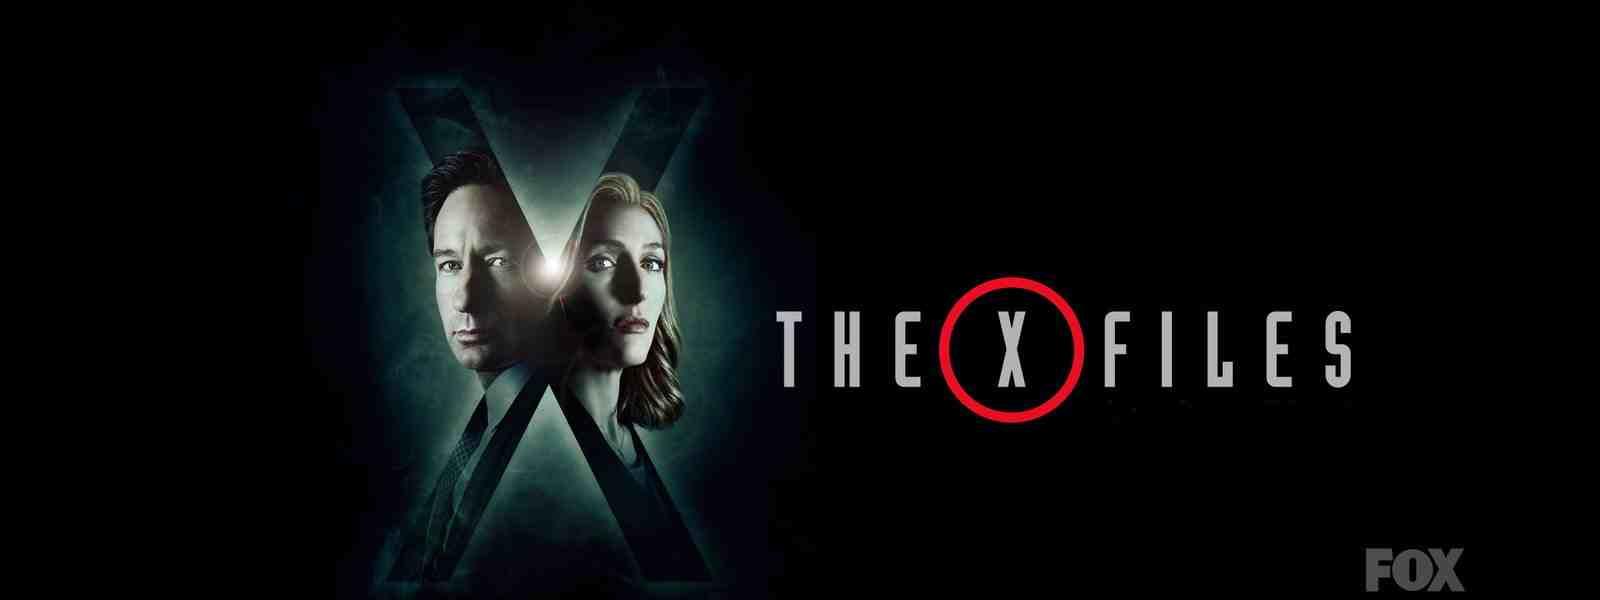 افضل مسلسلات الرعب - The X Files